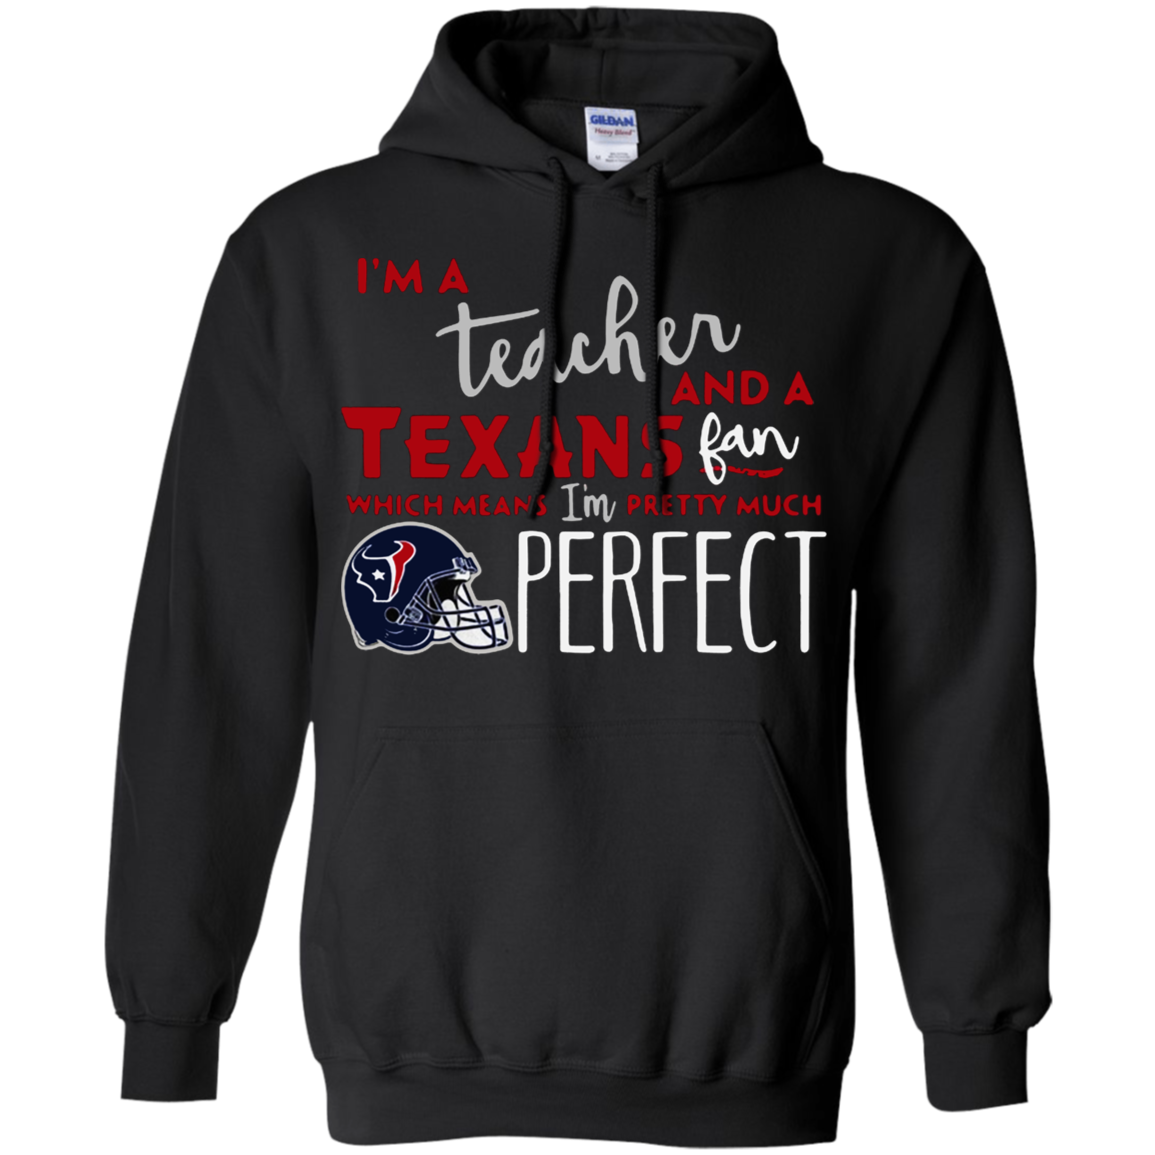 Iâ™m A Tea And A Houston Texans Fan Which Means Iâ™m Pretty Much Perfect Shirt G185 Pullover 8 Oz.